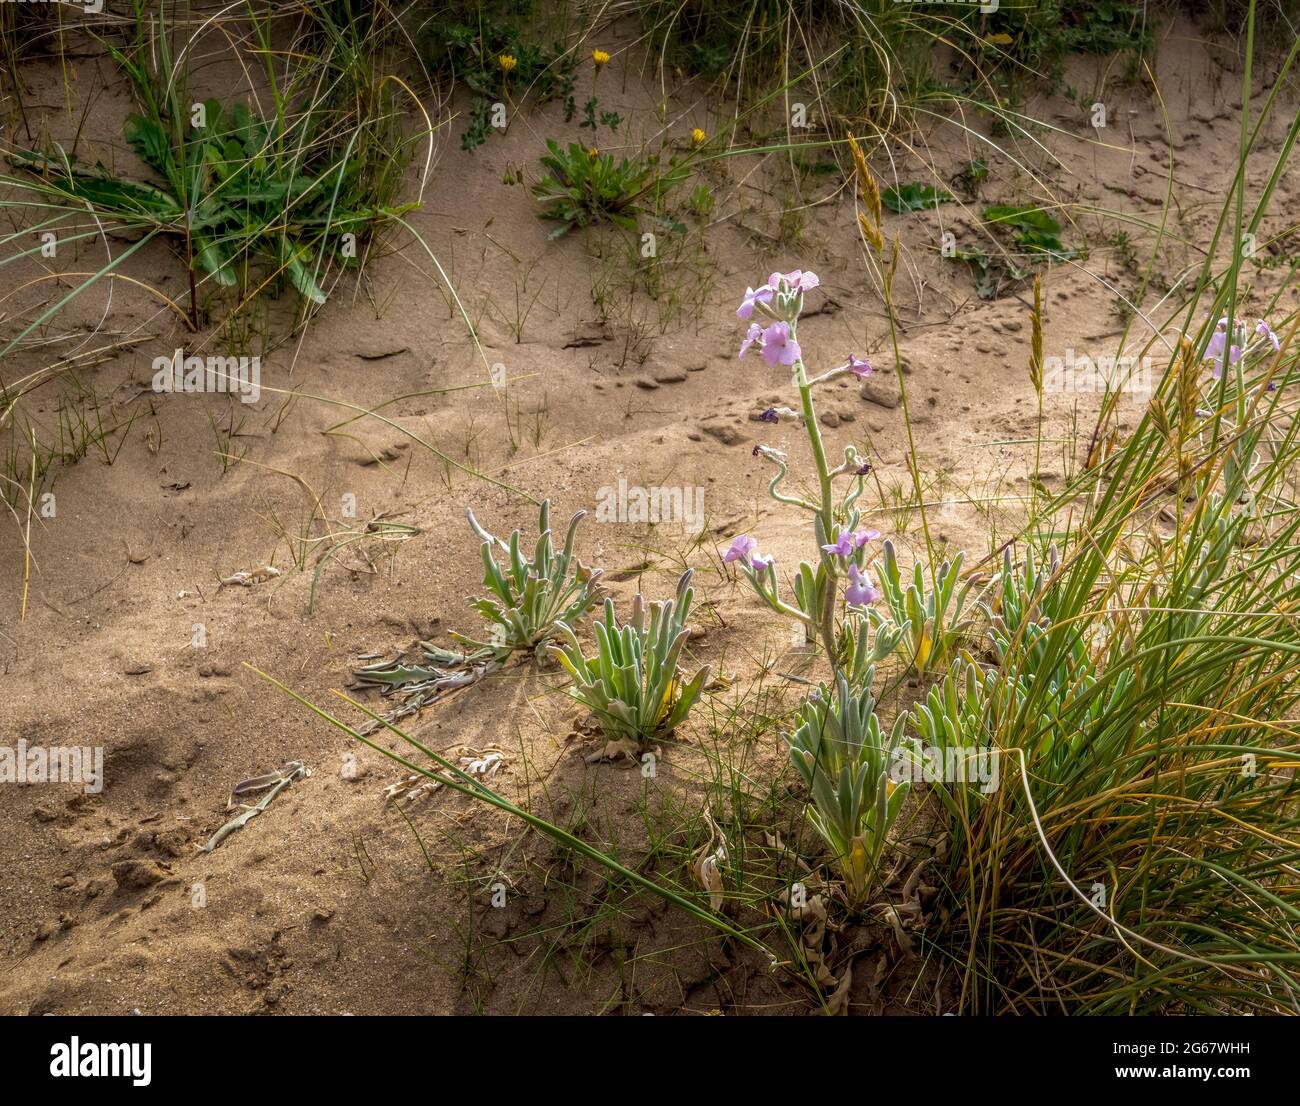 Sea stock plant aka Matthiola sinuata growing on sand dune, UK. With purple flowers. Stock Photo